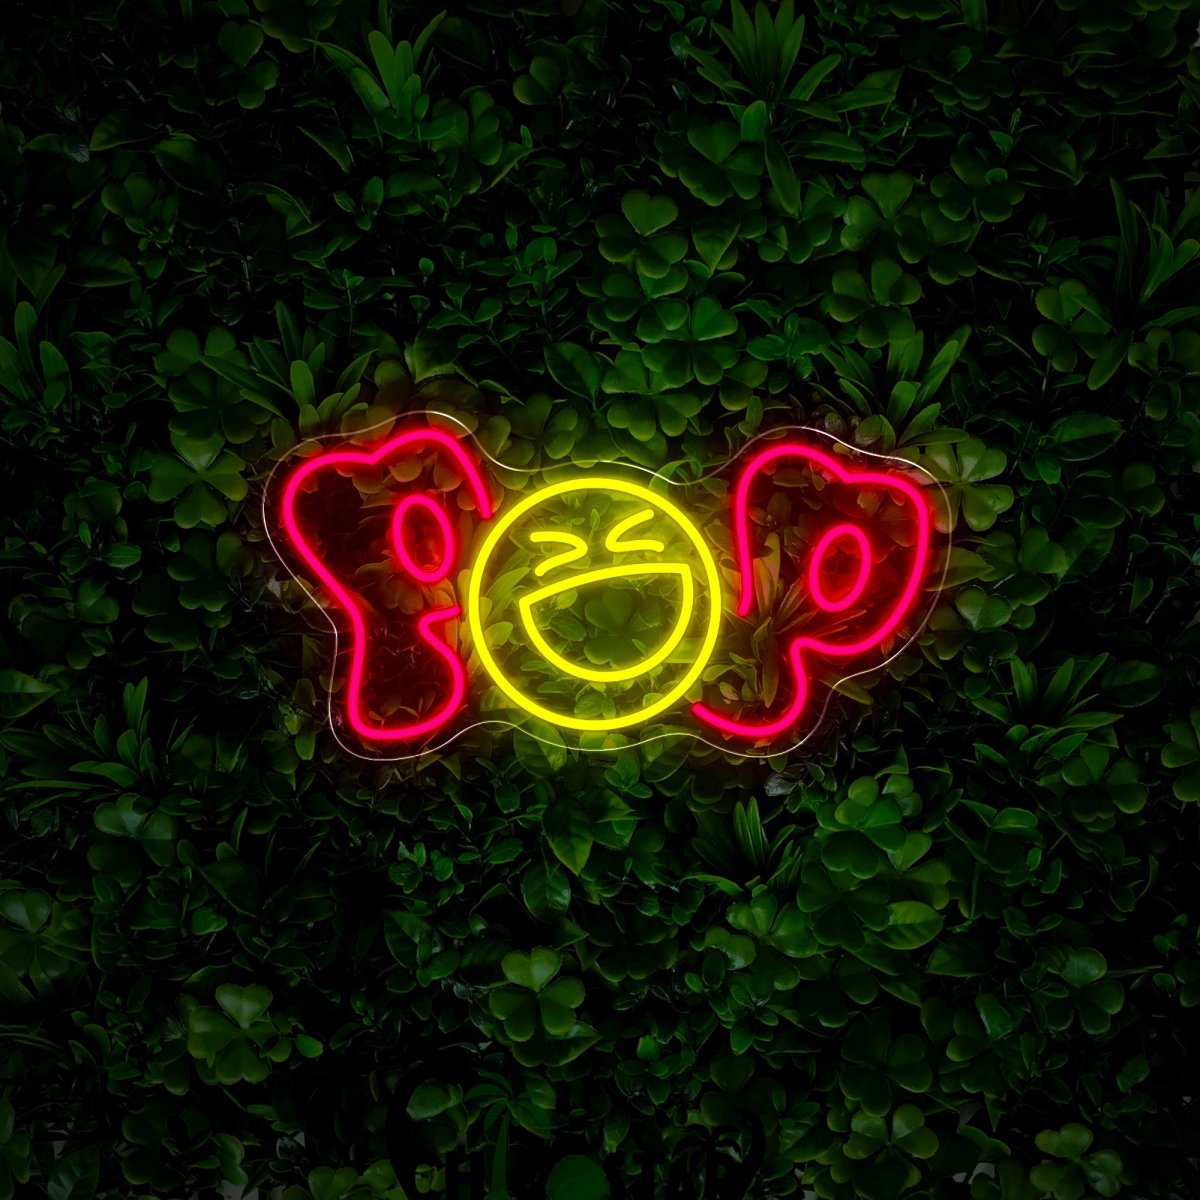 Pop Neon Sign - Reels Custom